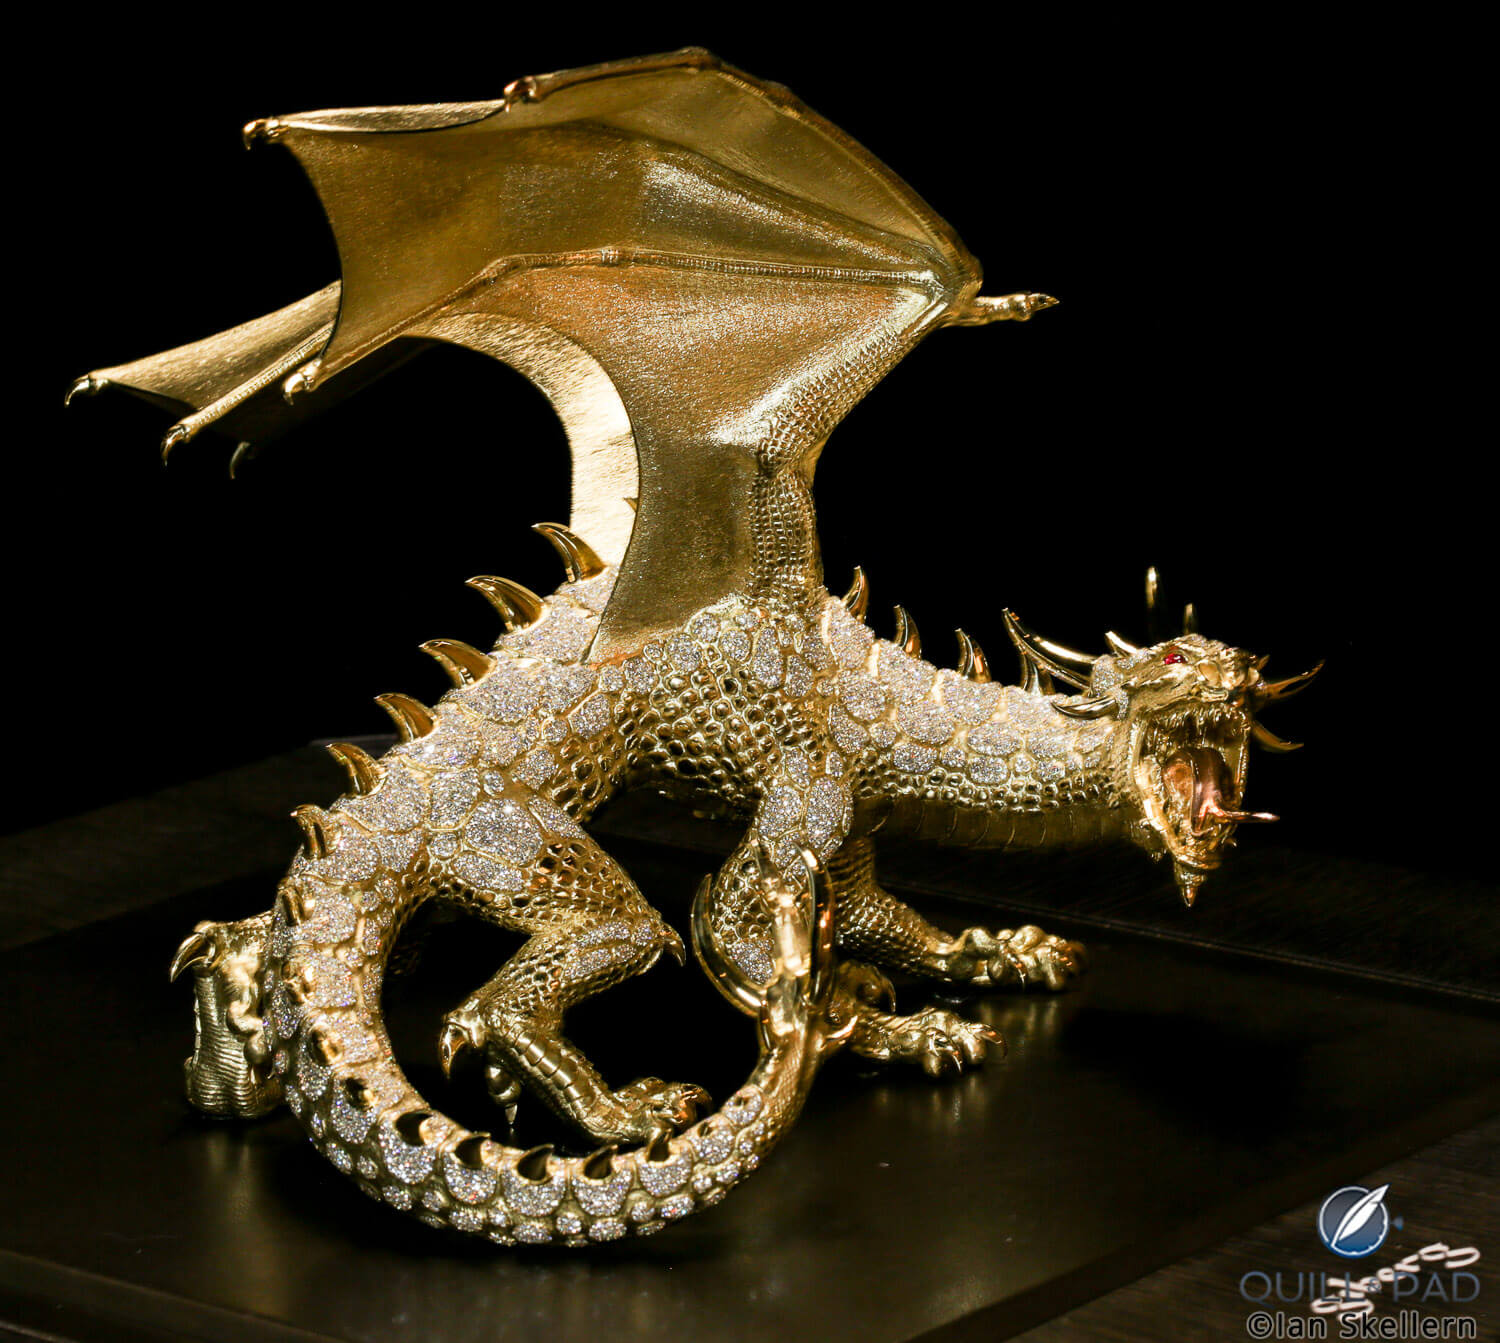 Ahton dragon by Giberg